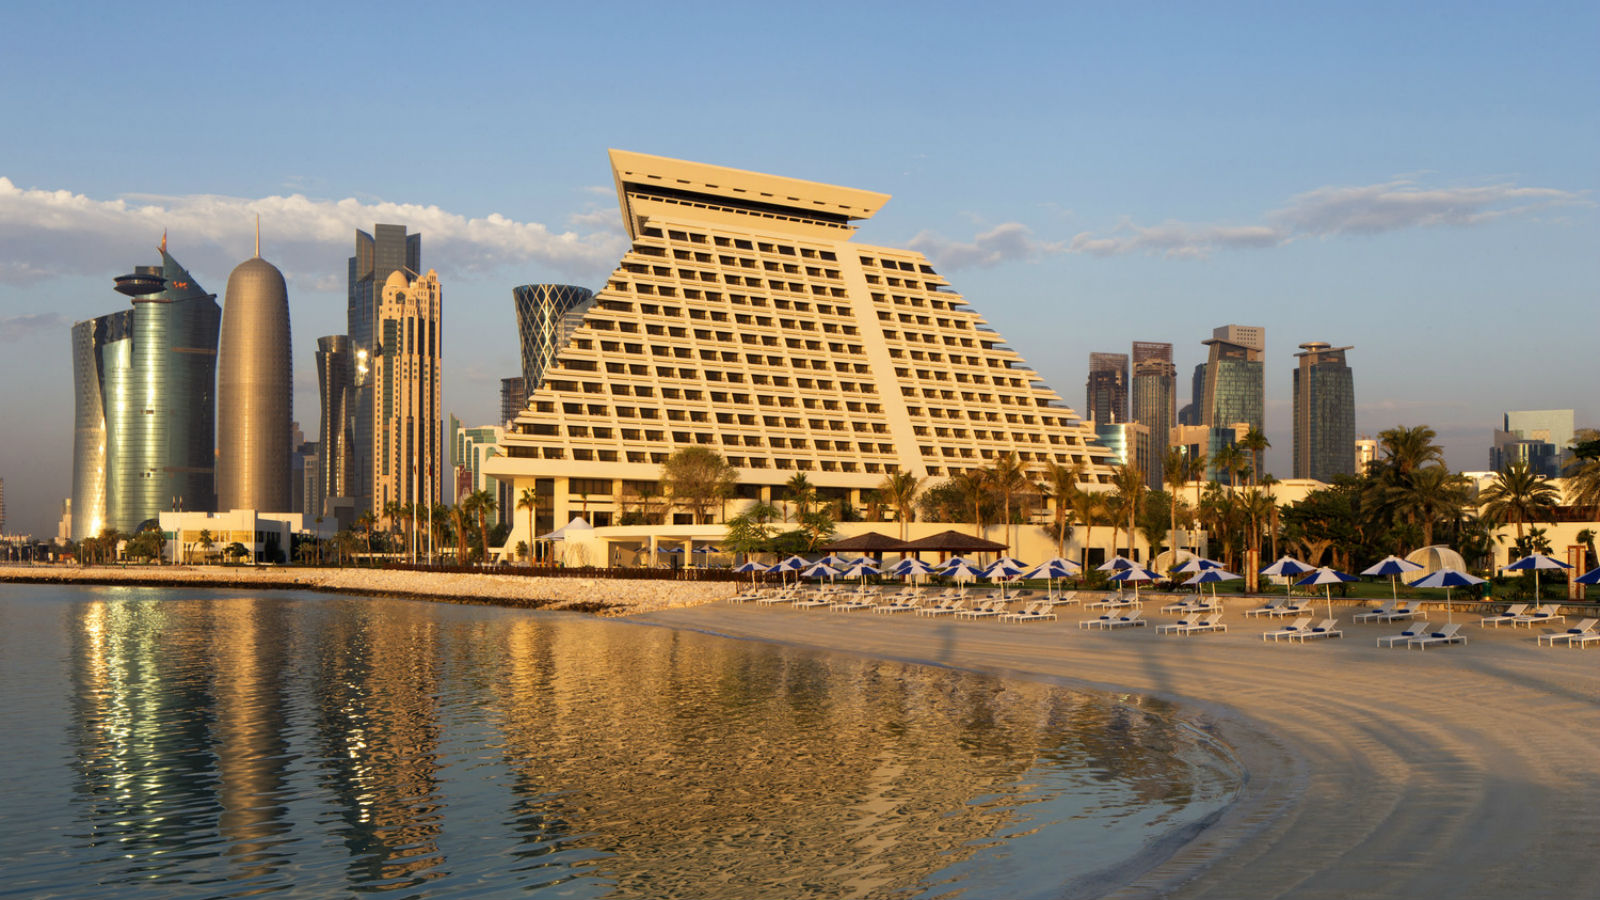 Sheraton Grand Doha Resort & Convention Hotel Doha, Qatar - Flyin.com